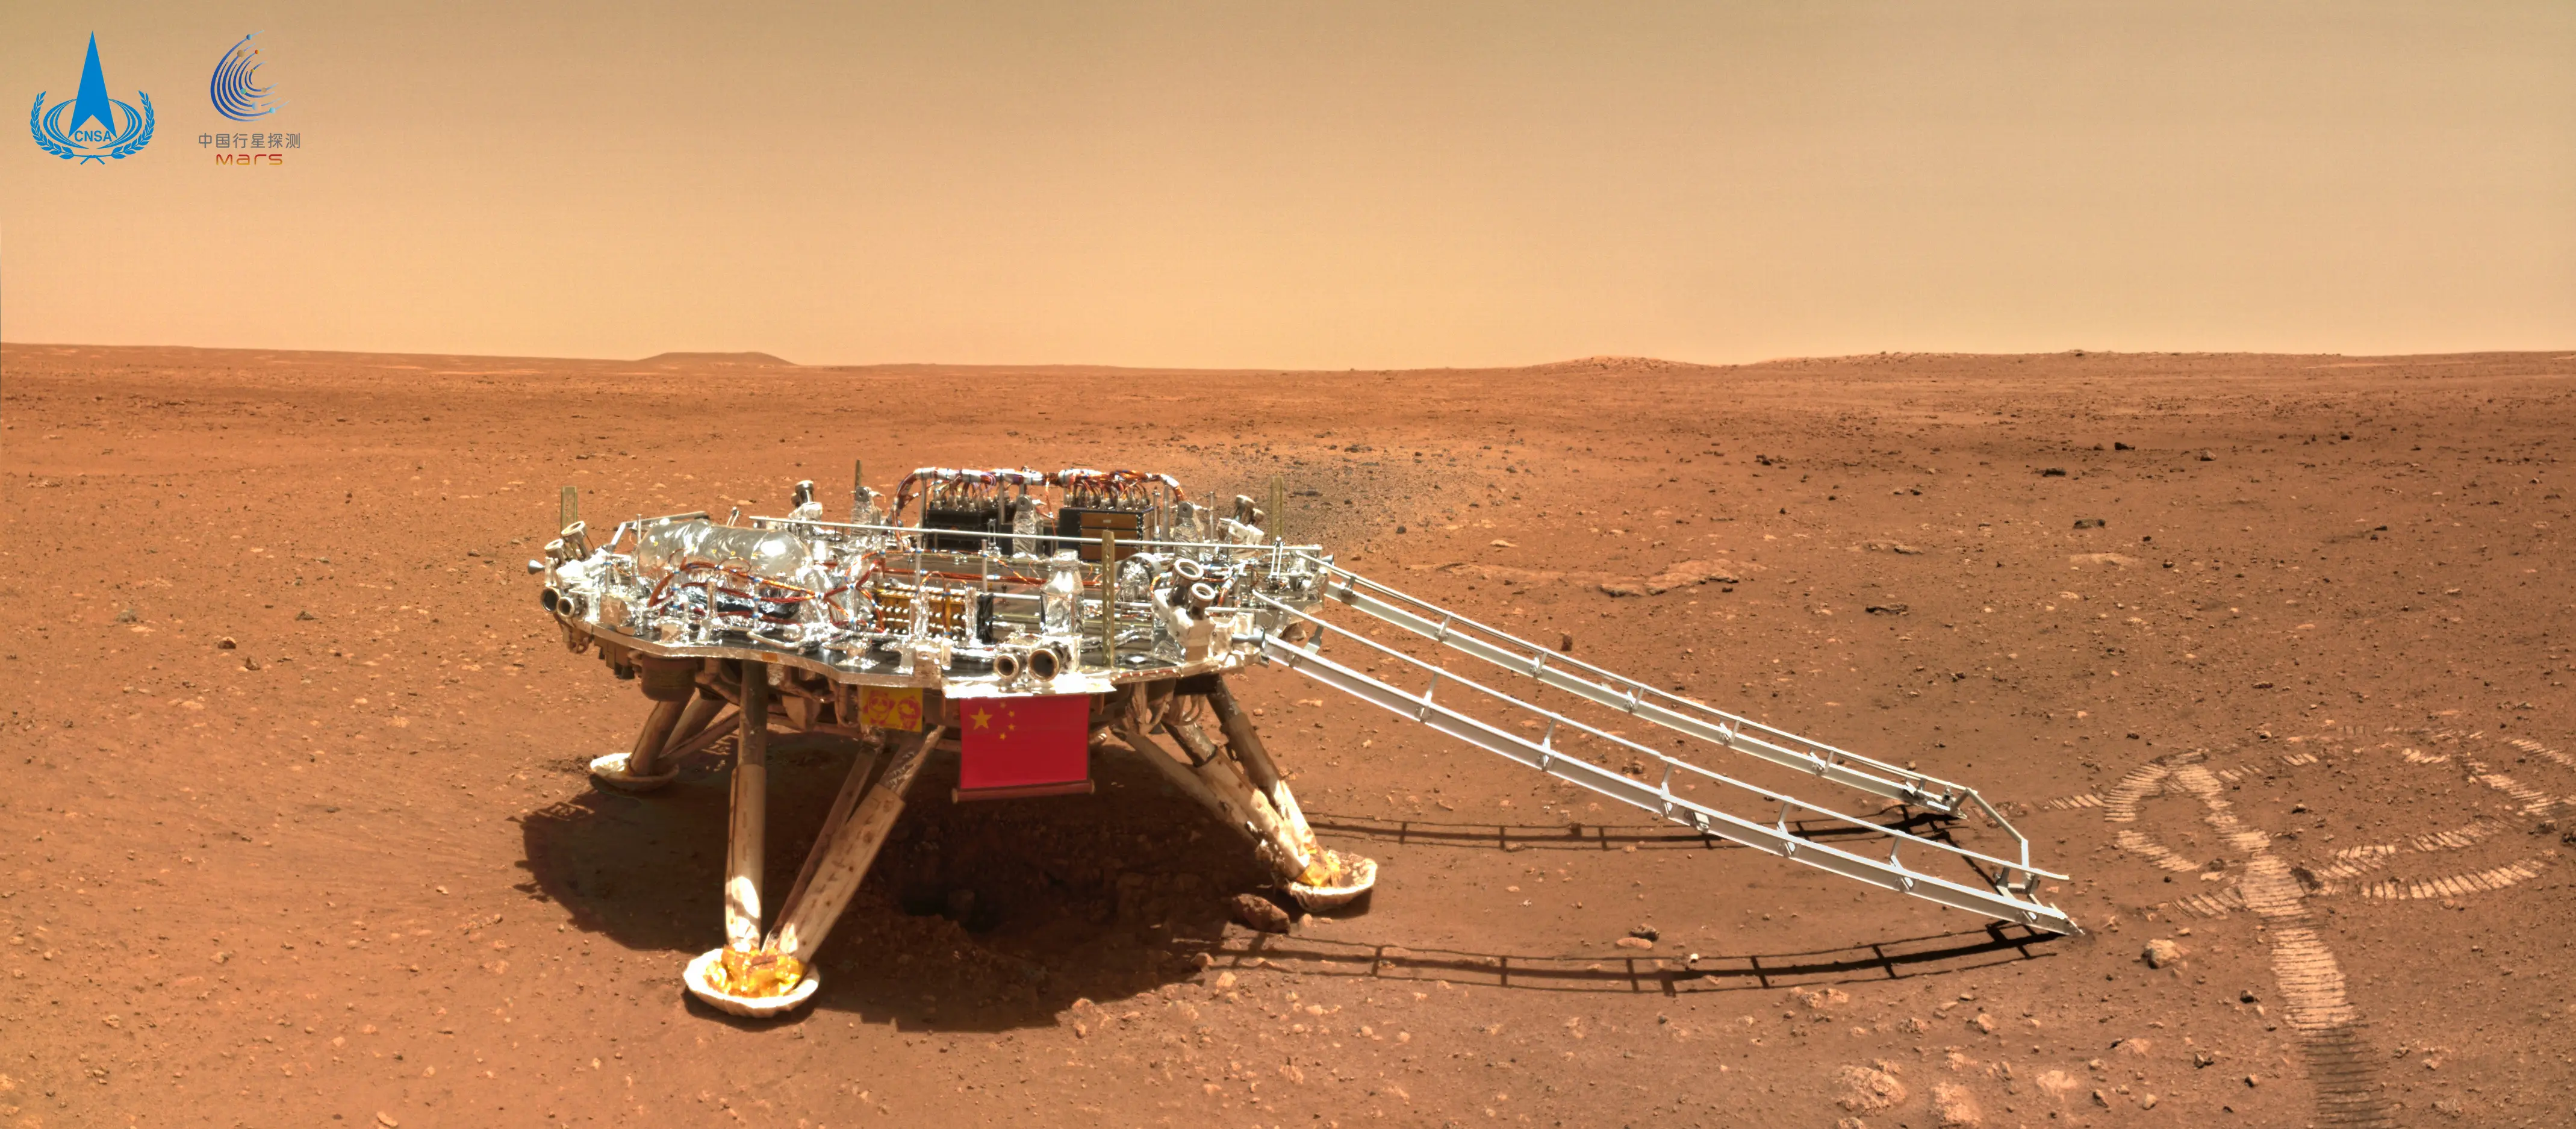 Photo Gallery of China's Zhu Rong Mars Rover[01]-zhaokaifeng.com